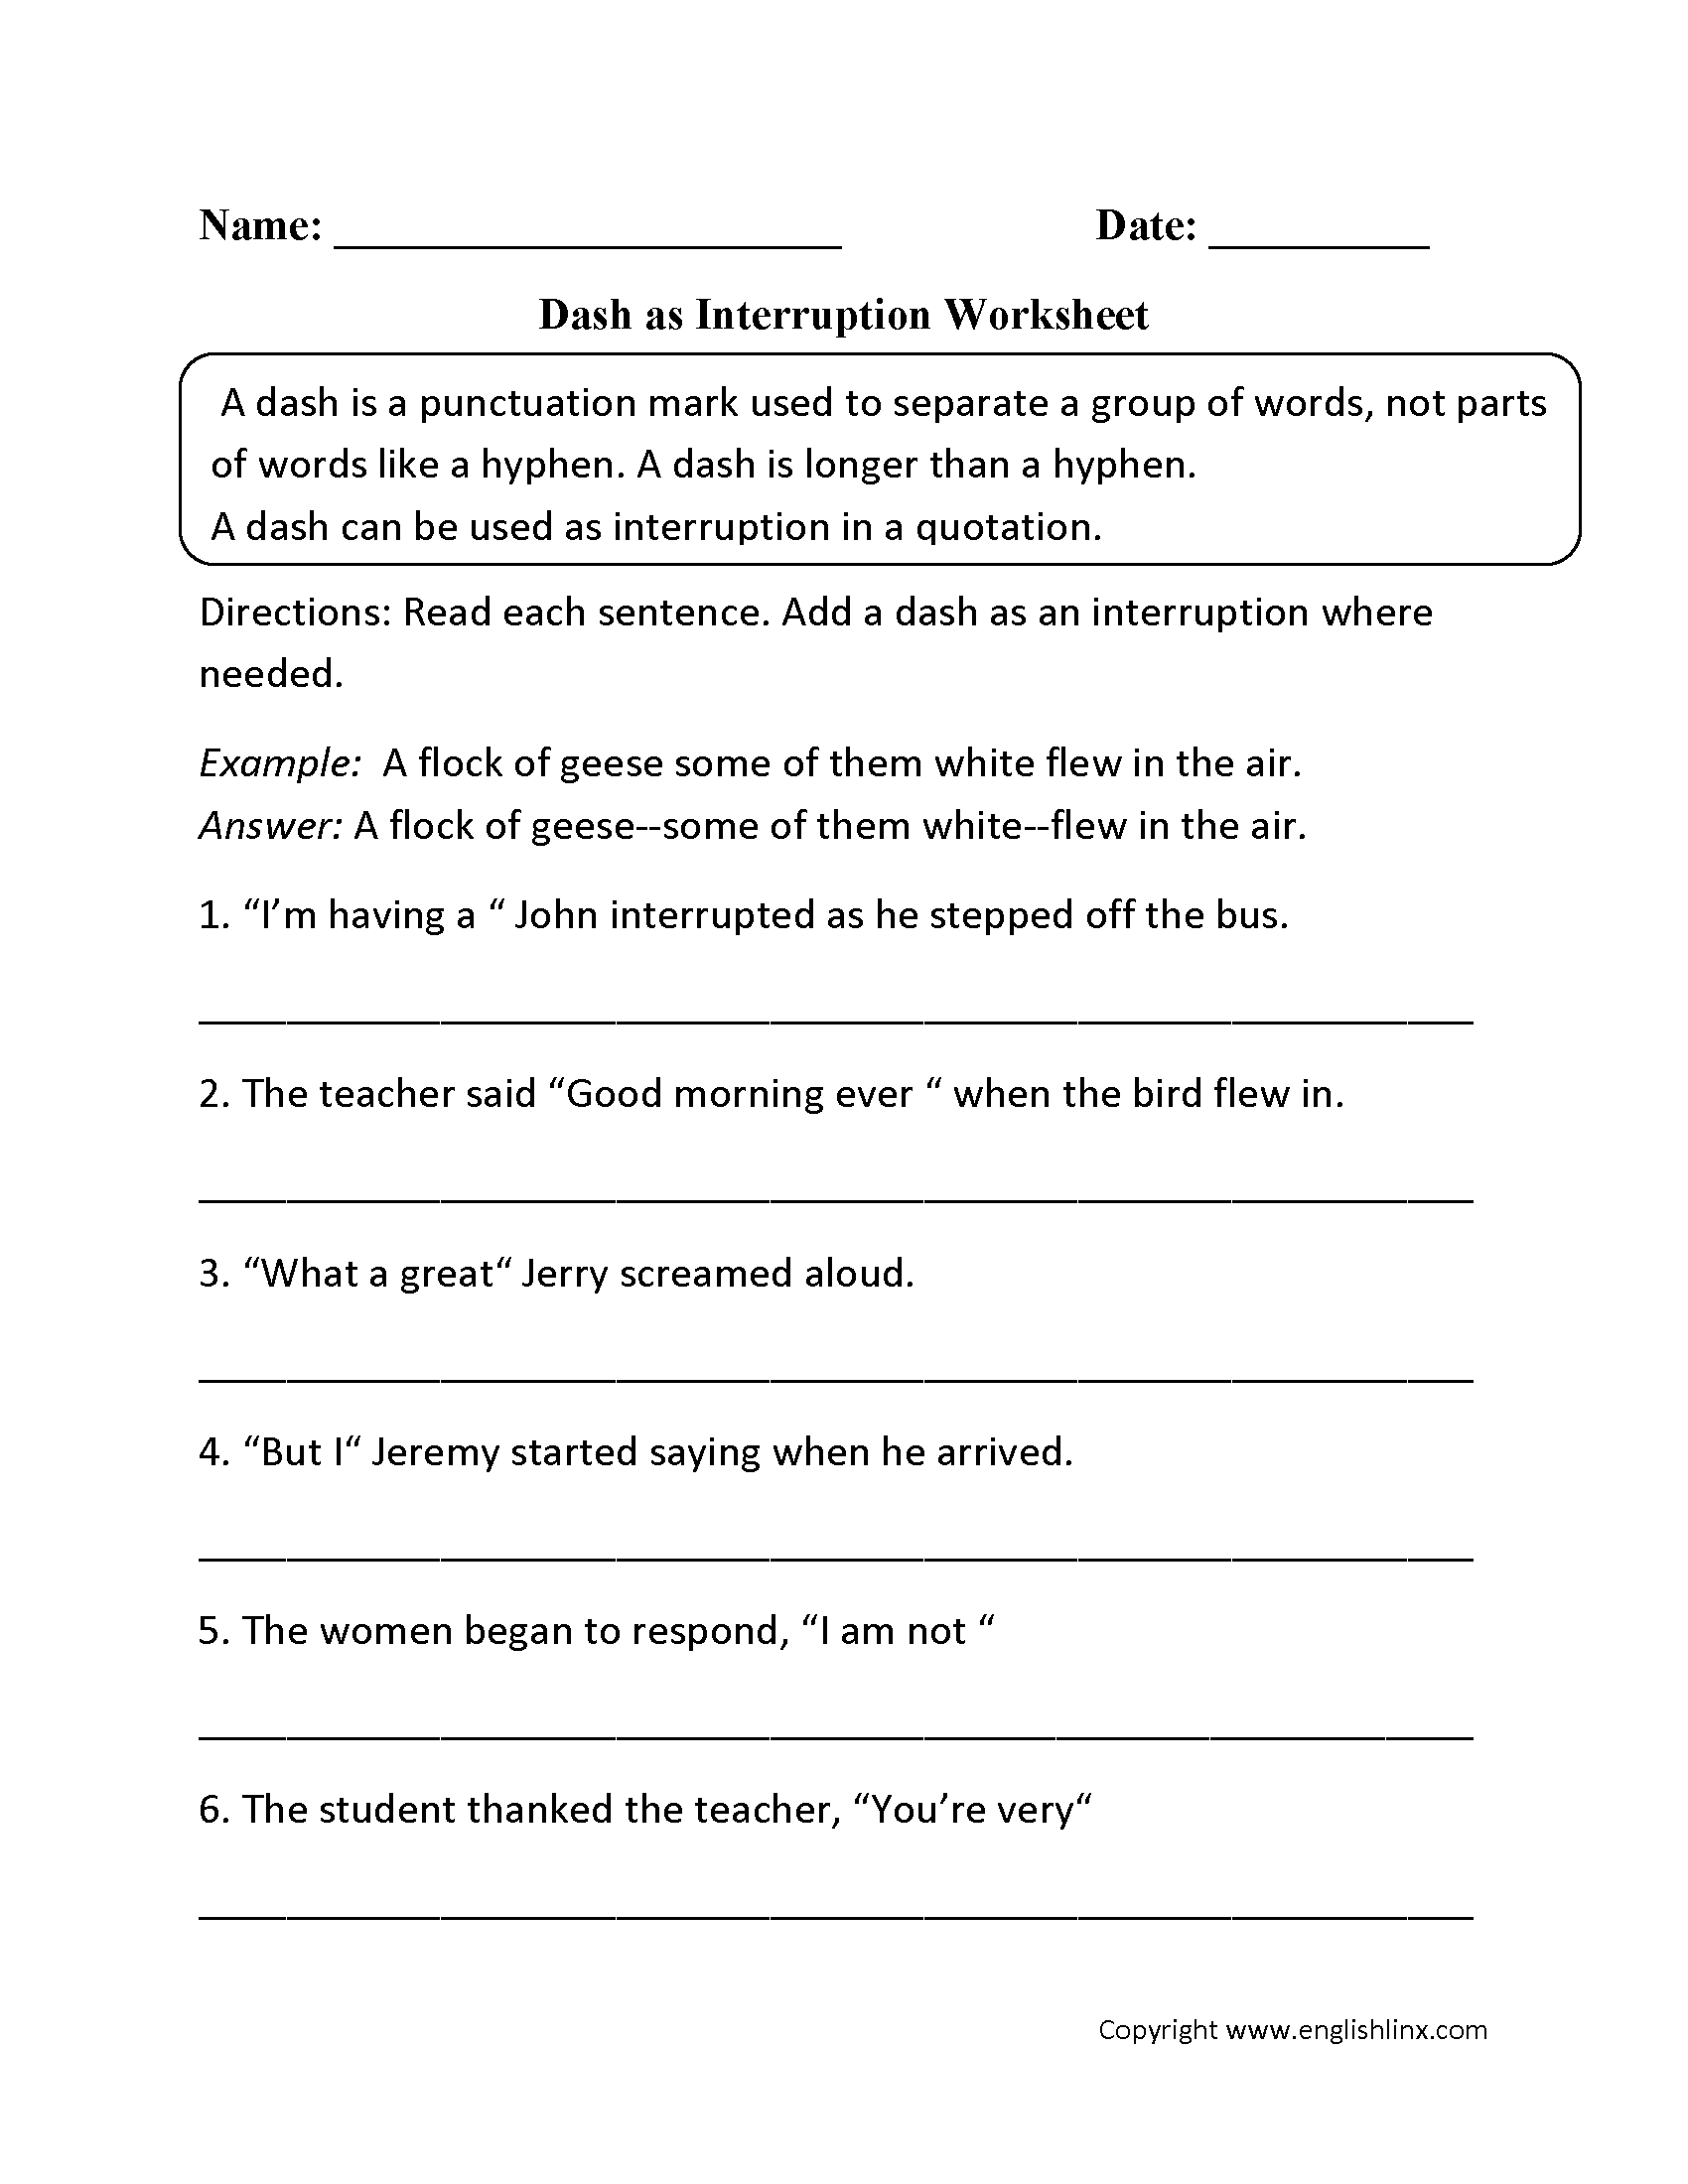 Grammar Worksheet On Hyphens And Dashes - Example Worksheet Solving